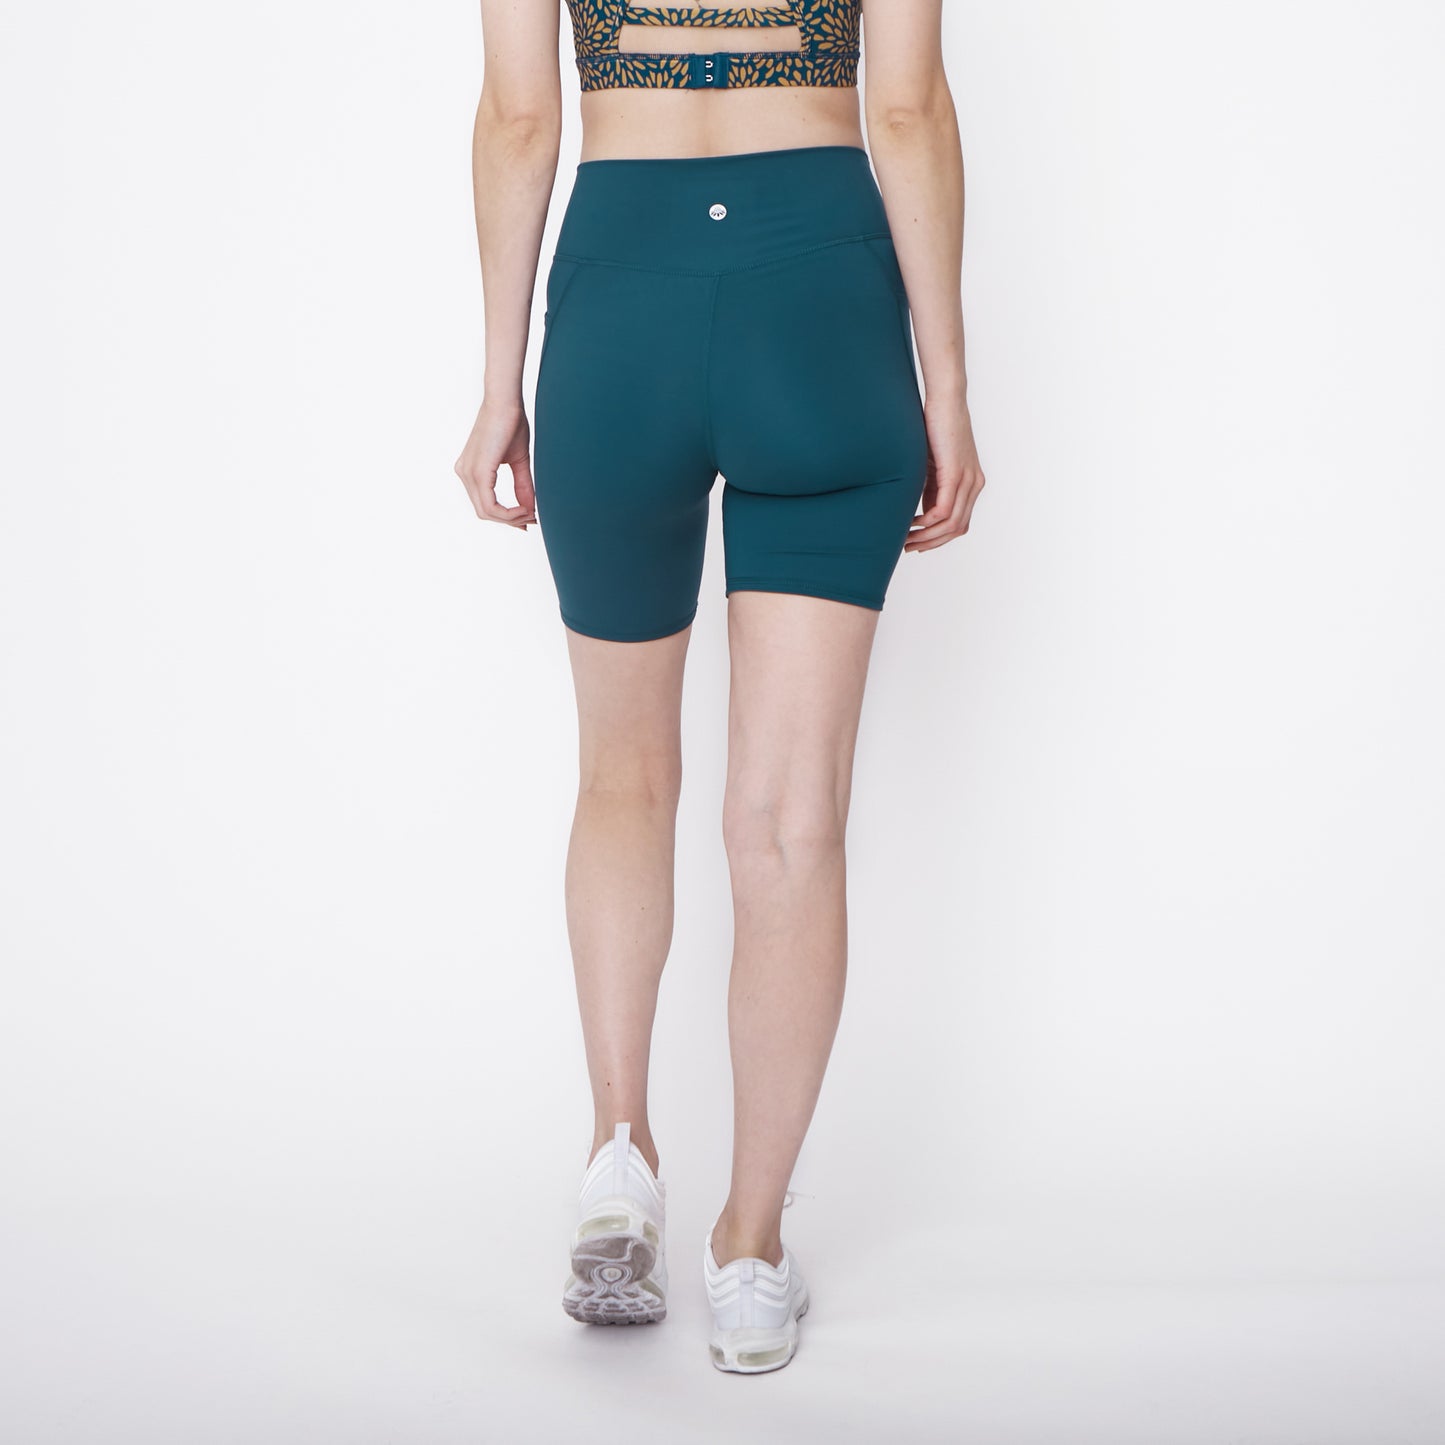 Skin Biker Shorts (8 in. inseam) - Pacific